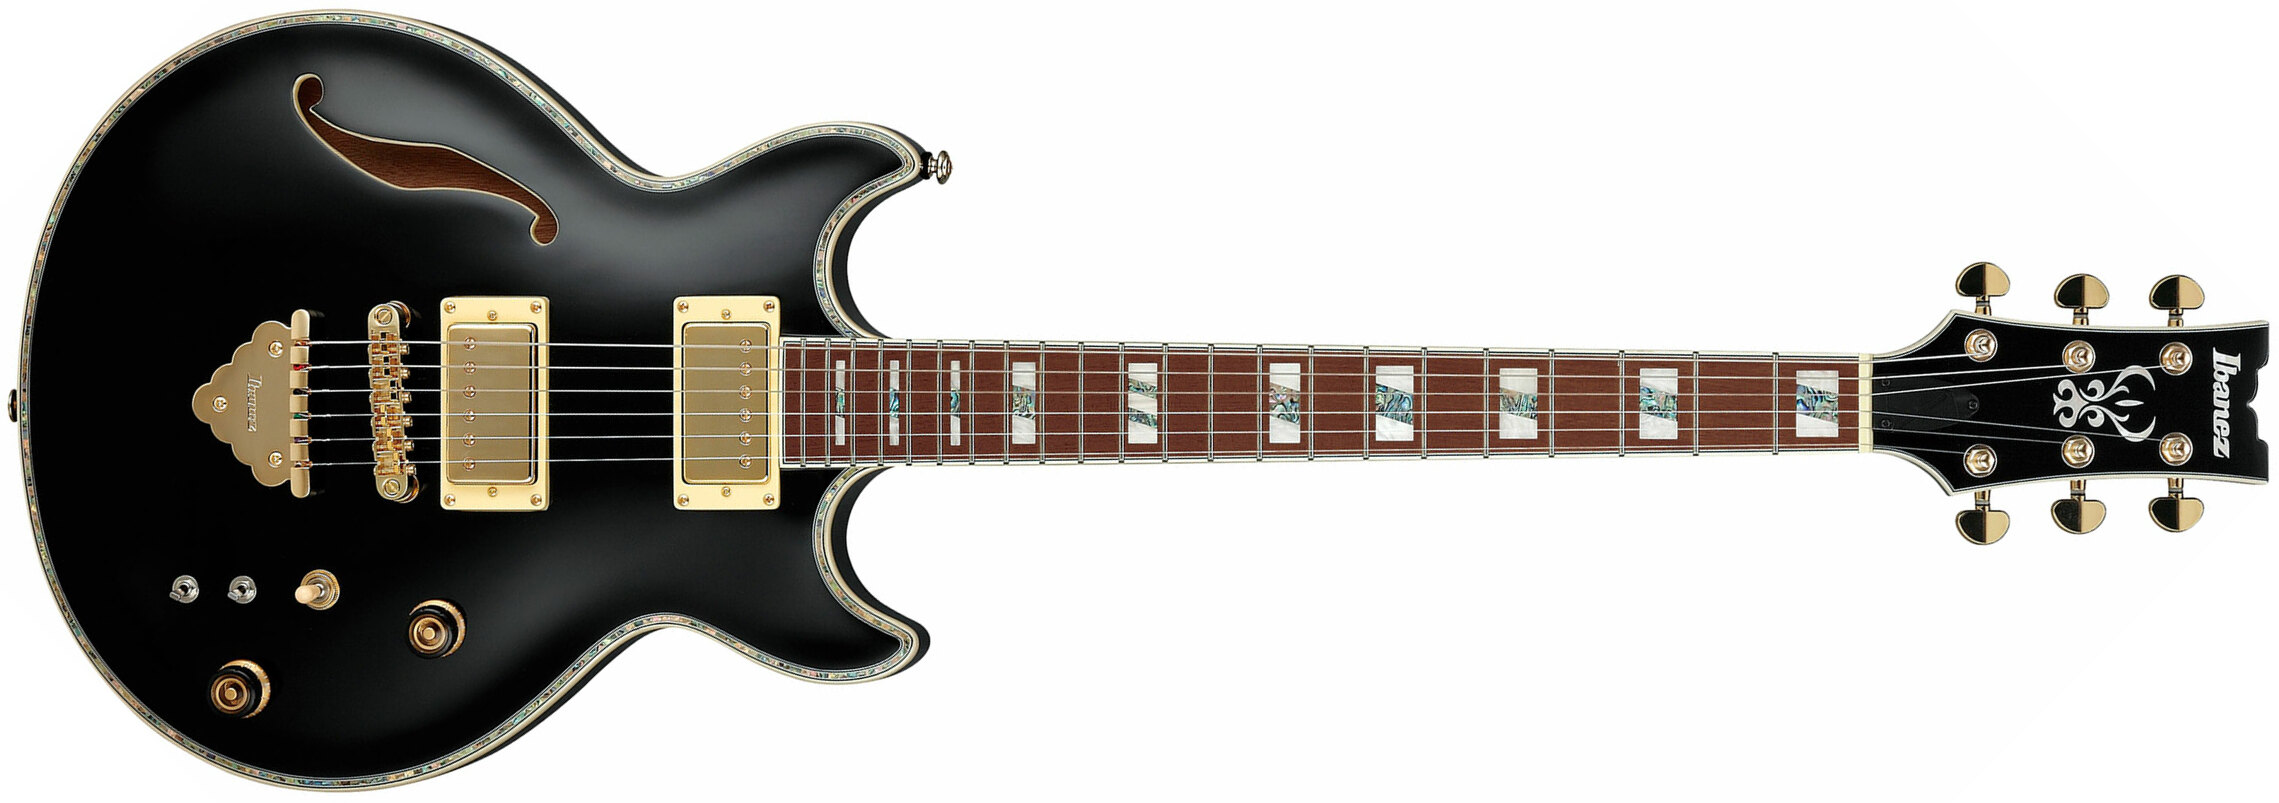 Ibanez Ar520h Bk Standard Hh Ht Jat - Black - Hollow-body electric guitar - Main picture